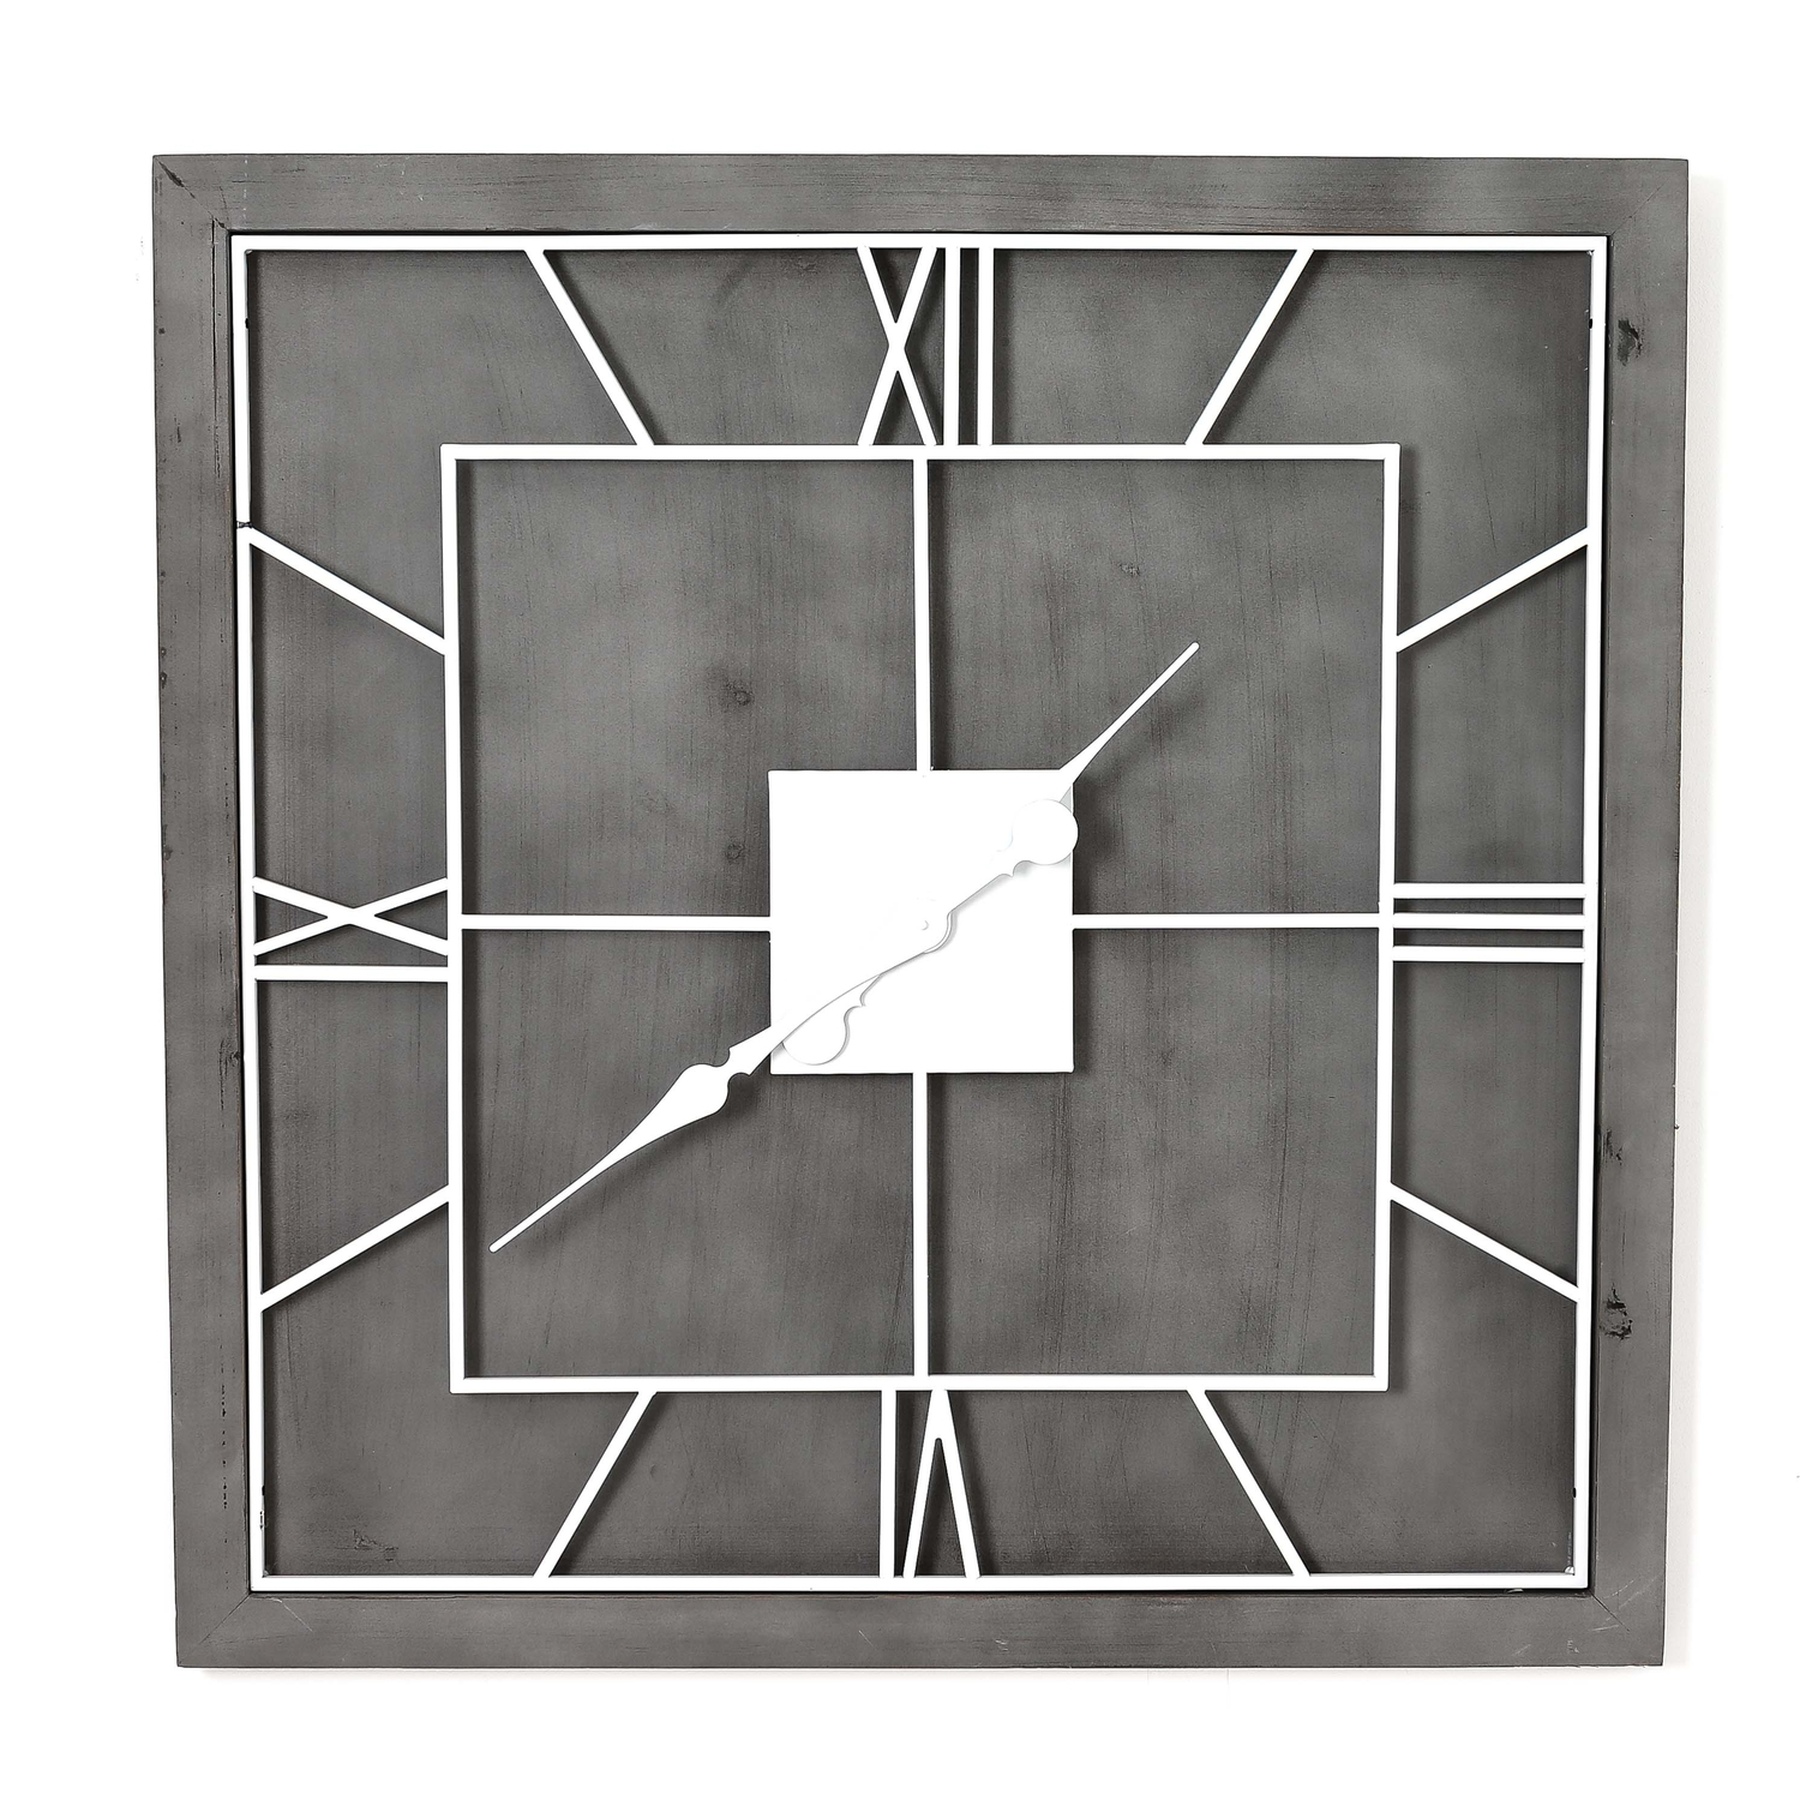 Williston Grey Large Square Wall Clock - Image 1